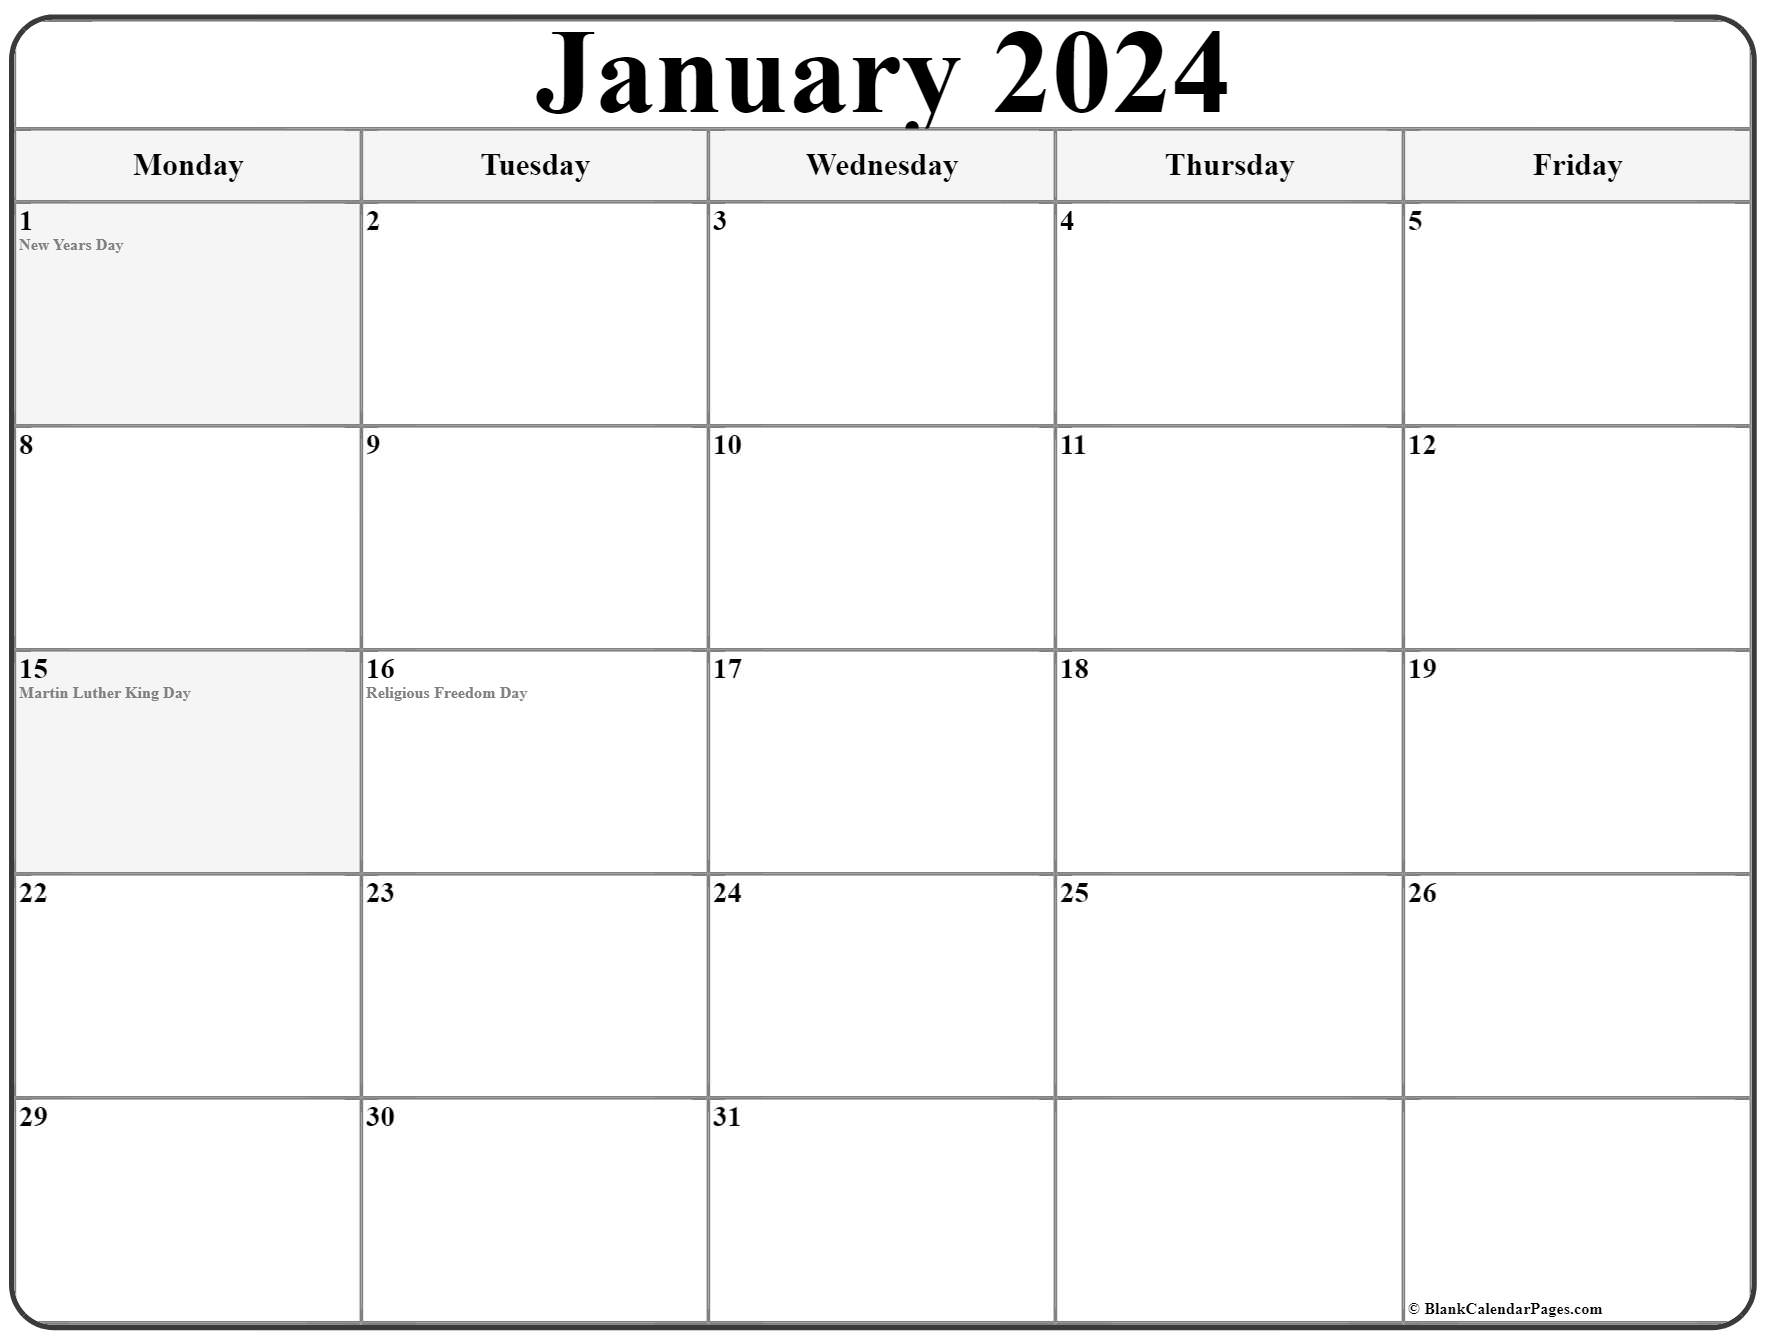 monthly-calendar-2023-printable